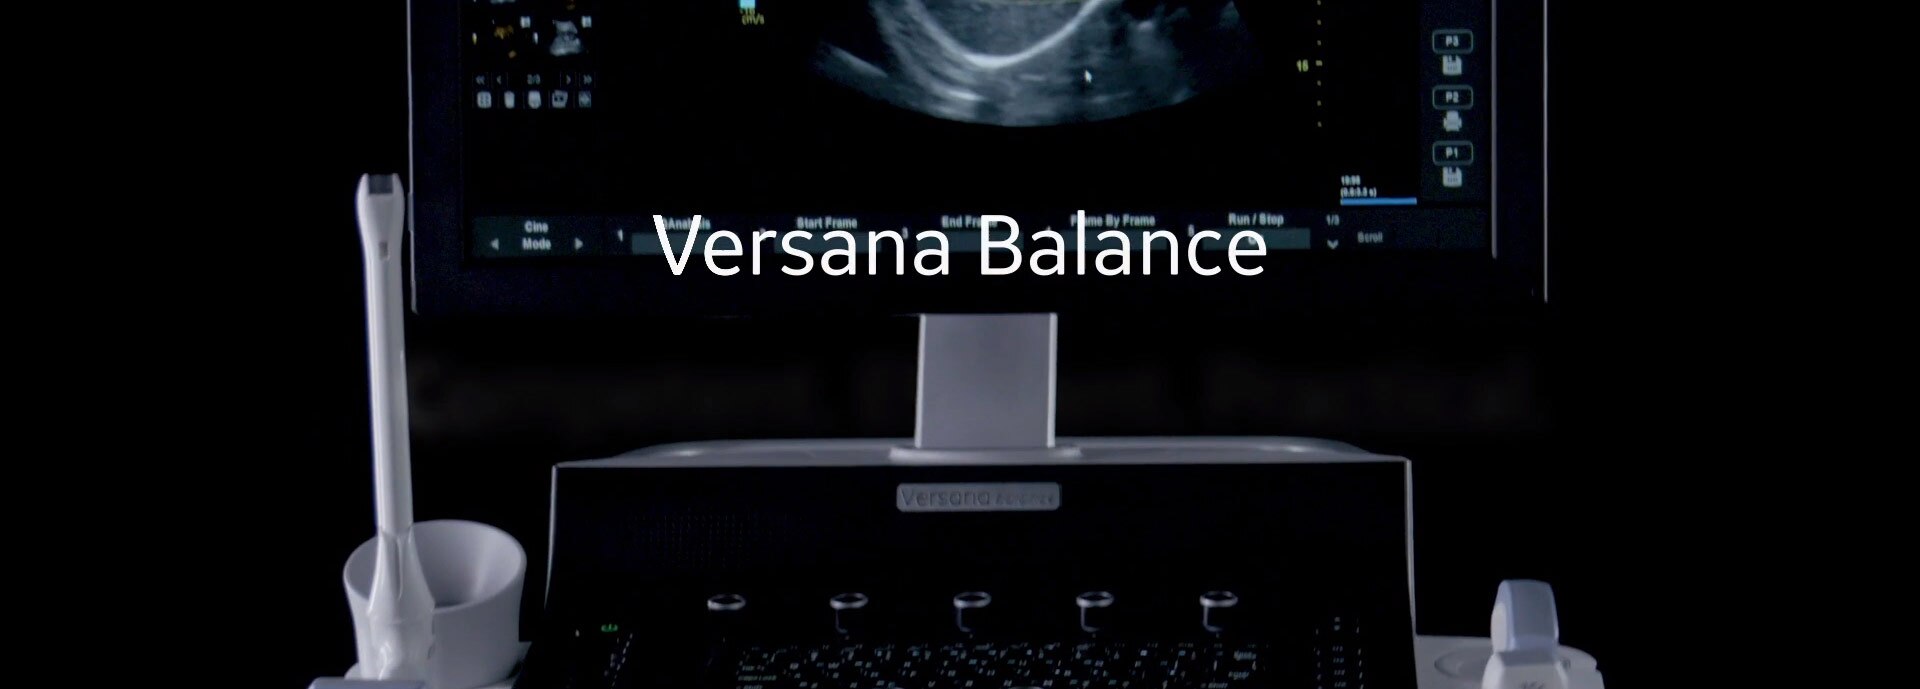 versana-balance-video1